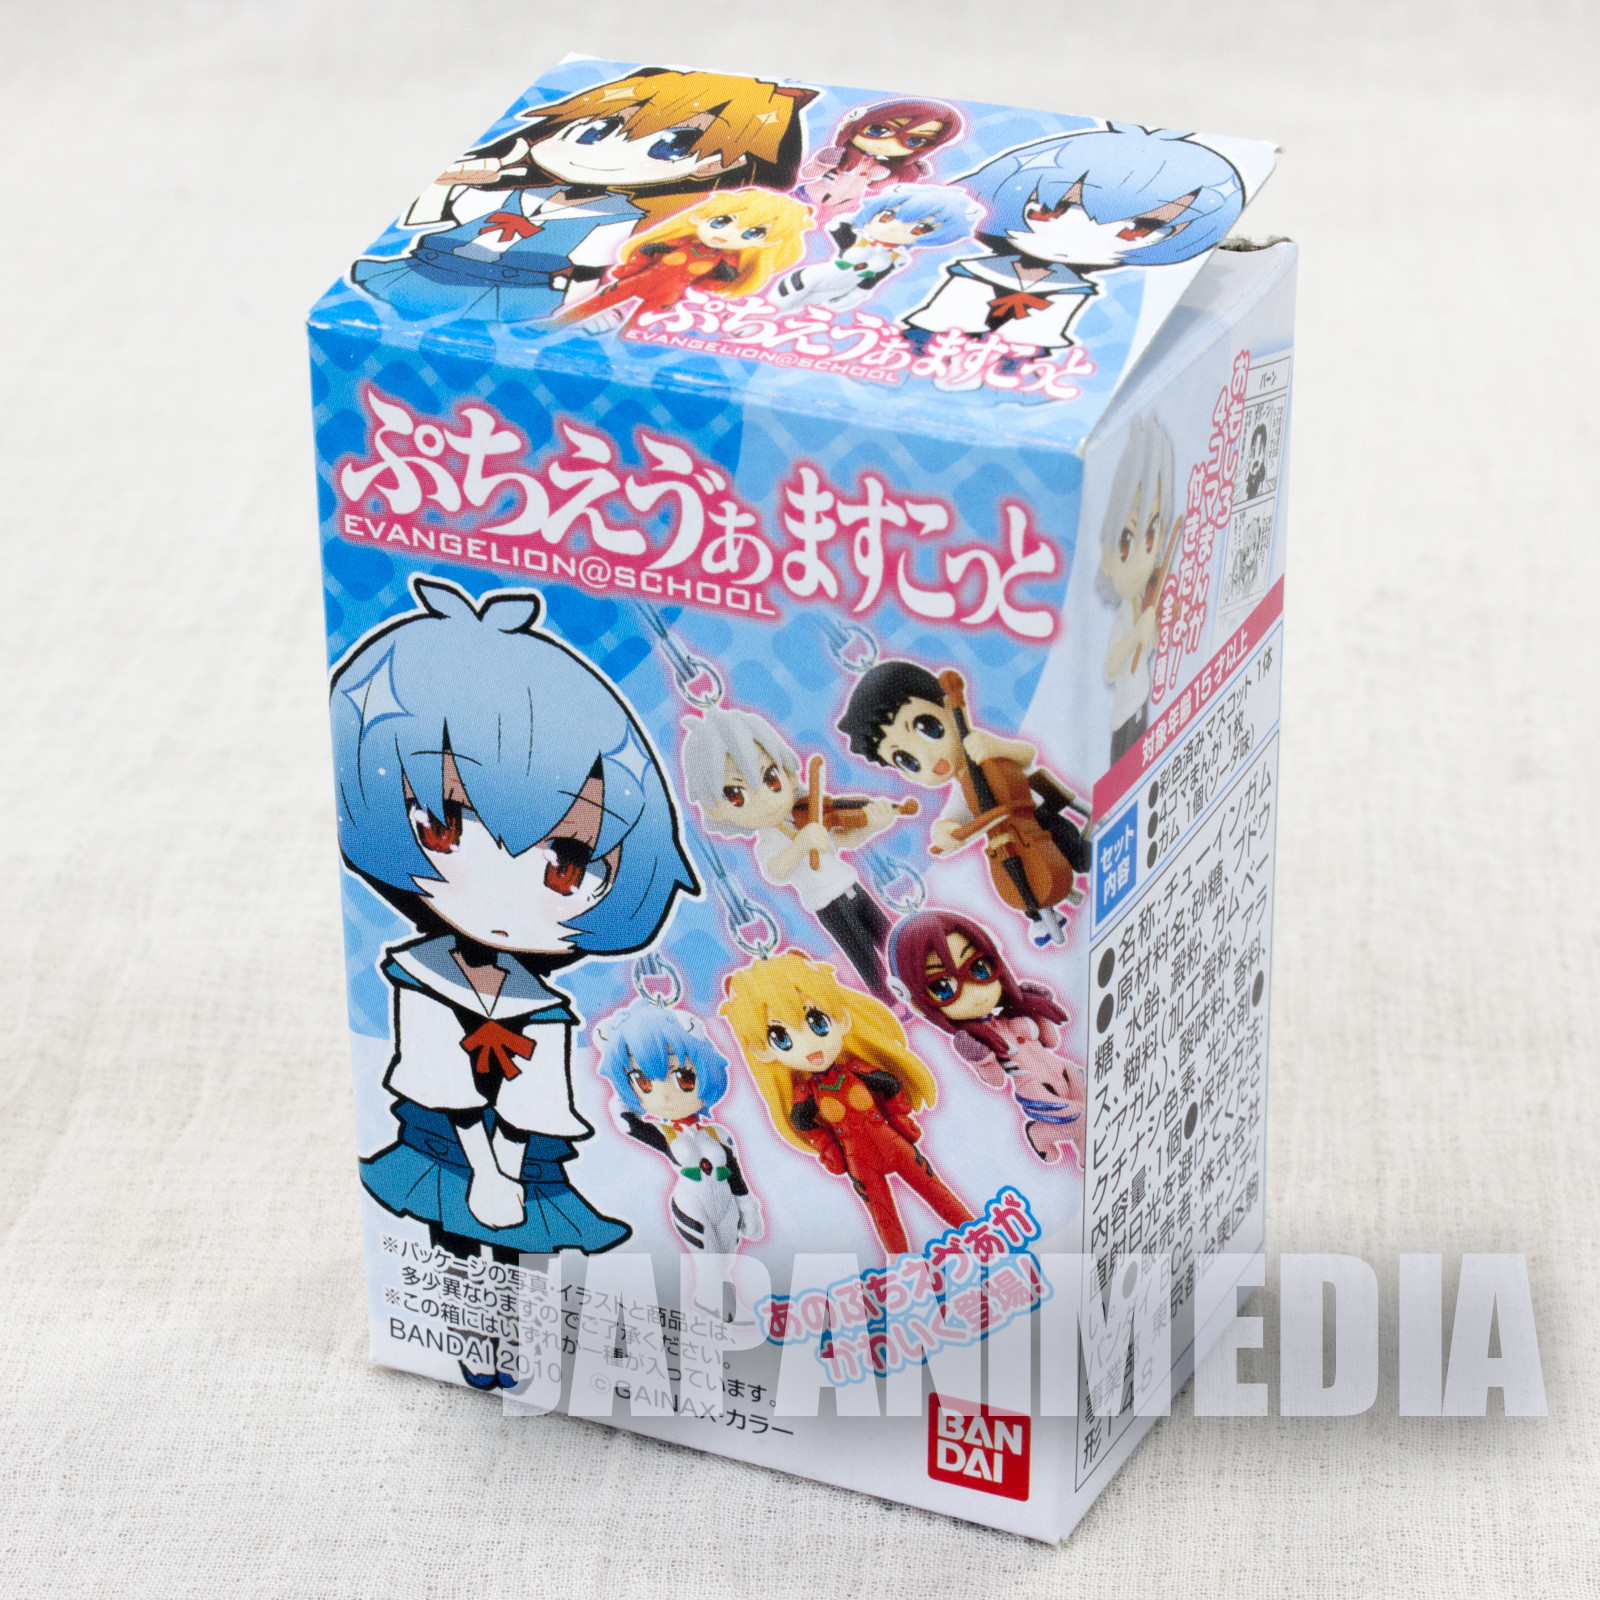 Evangelion Asuka Langley Petit EVA Mascot Mini Figure Strap ANIME JAPAN